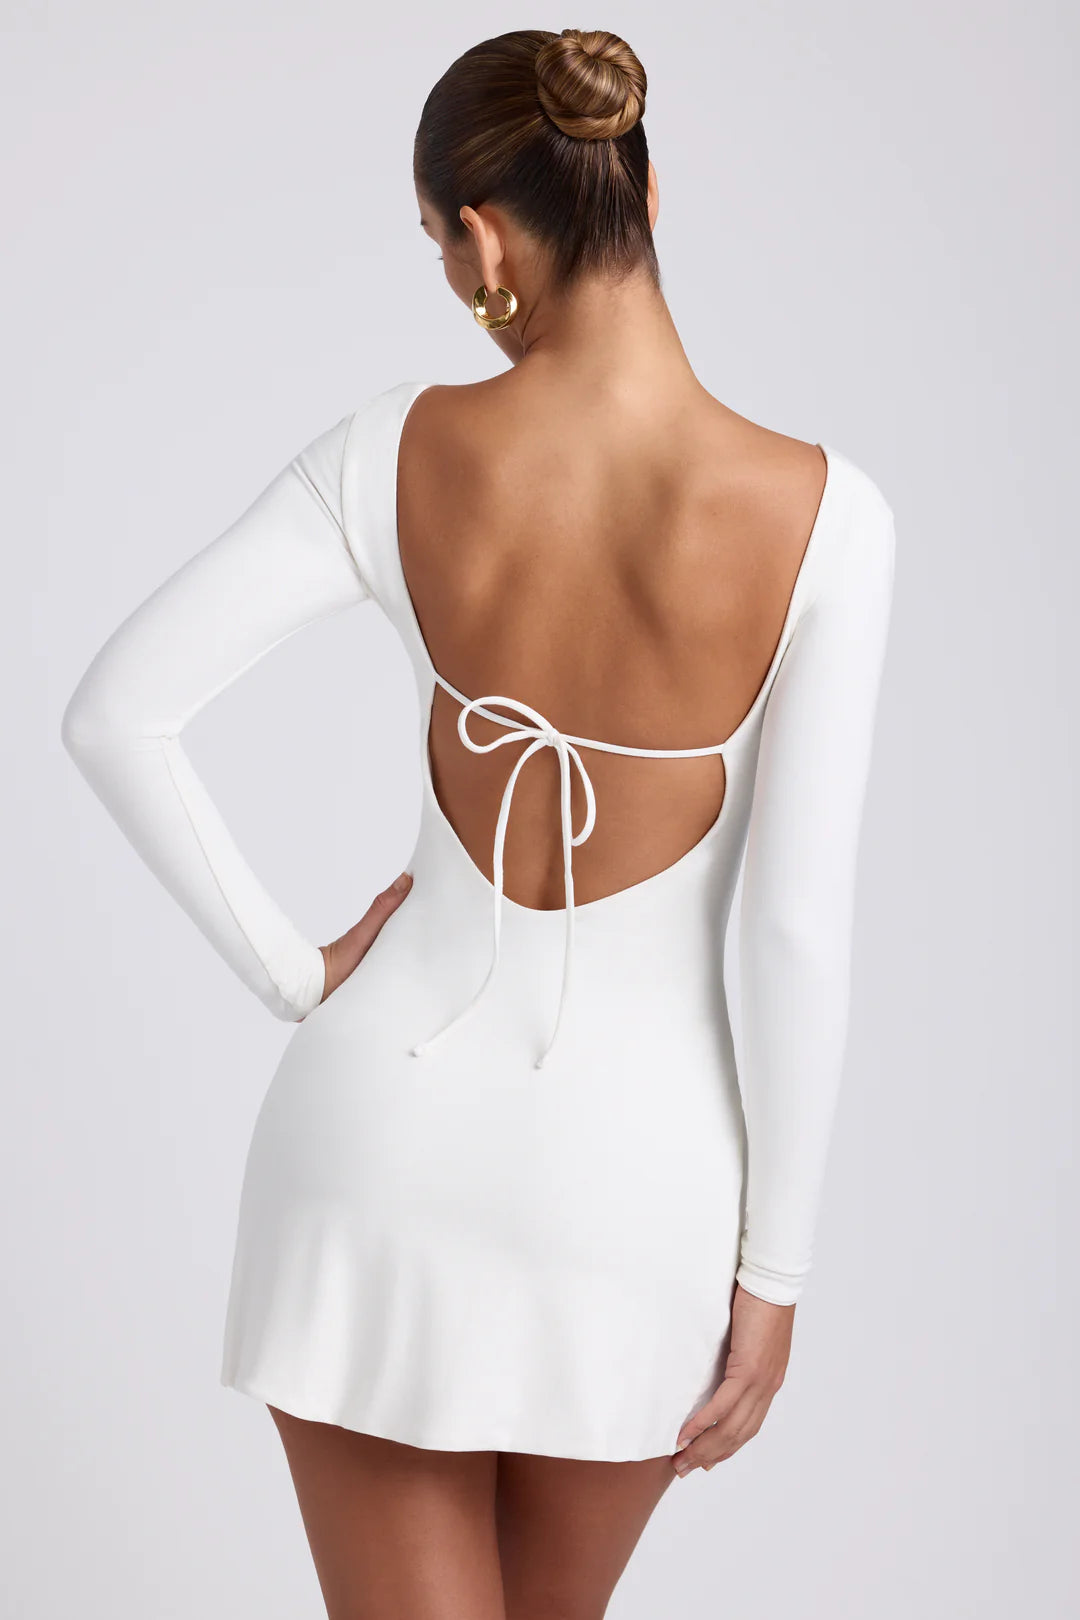 Modal Square Neck Long Sleeve Mini Dress in White